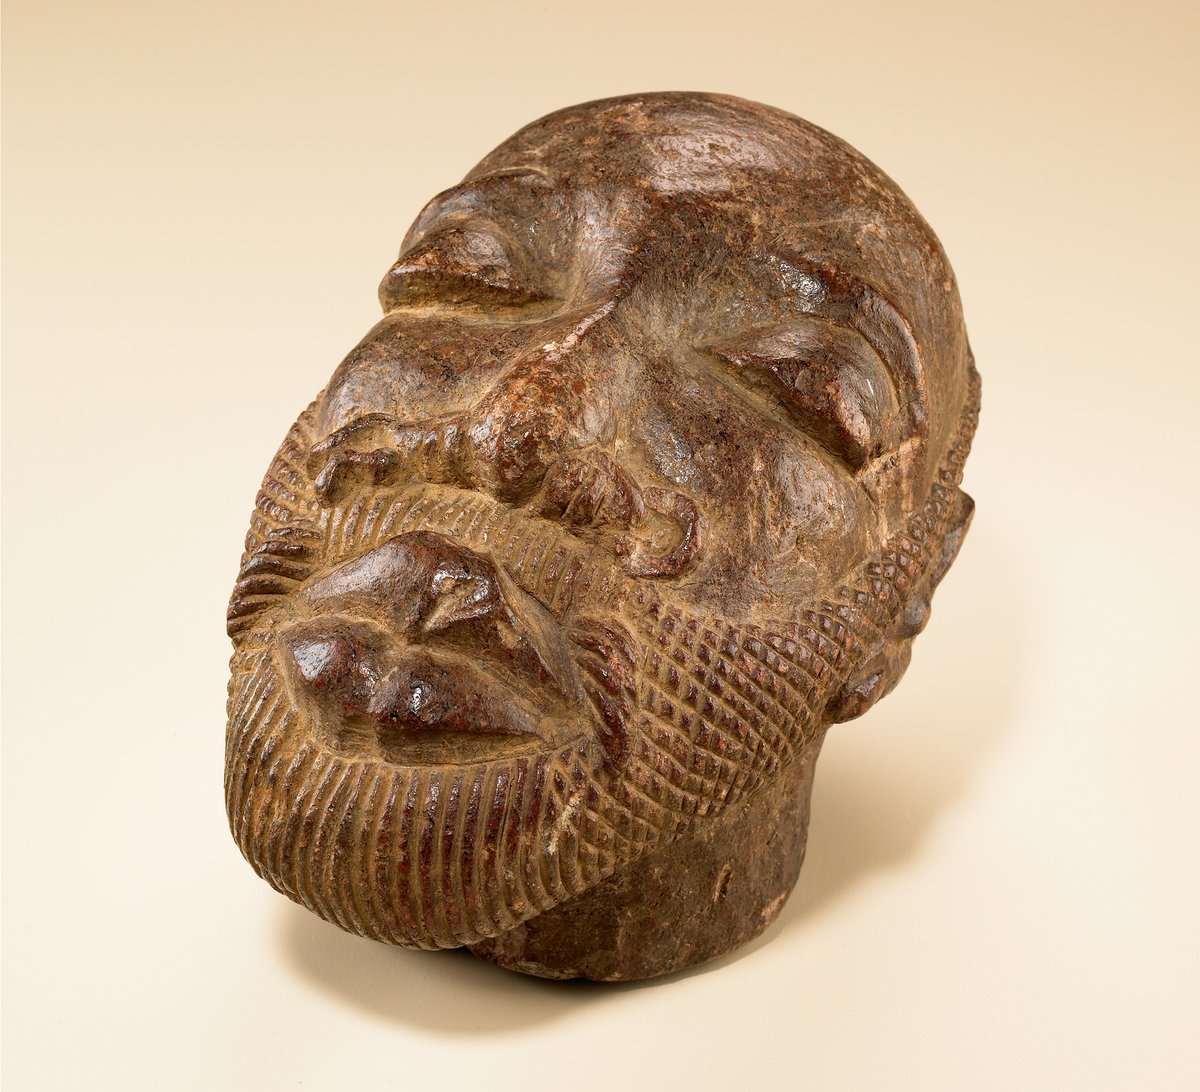 Title: Head

Location: Sierra Leone

Date: 15th-17th century

si.edu/object/edanmdm… 

 #SierraLeone #ArtBot